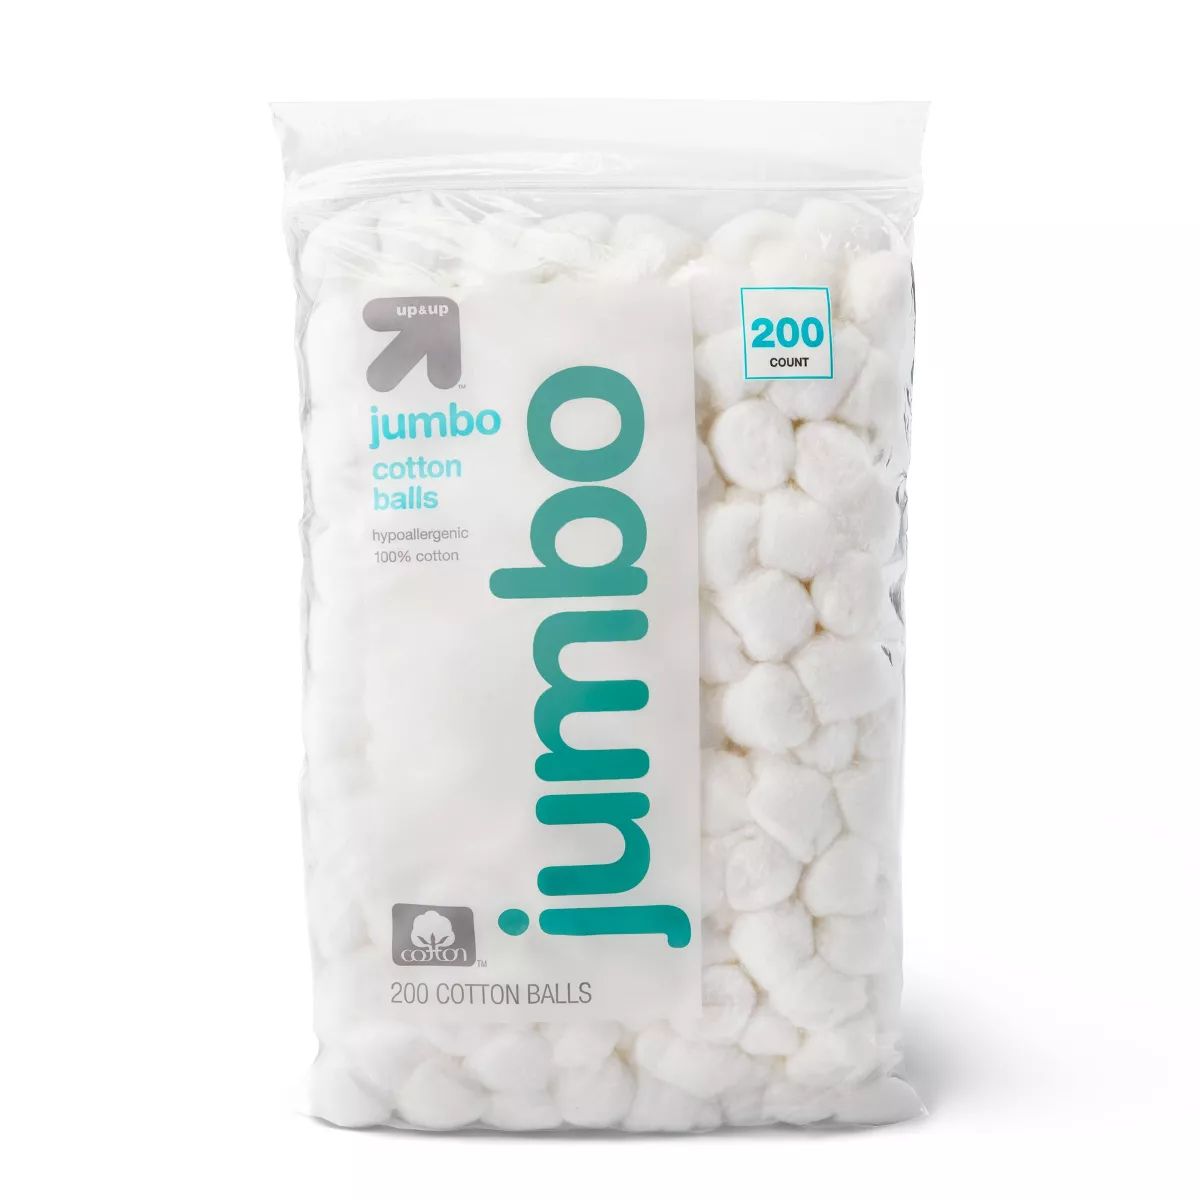 Jumbo Cotton Balls - 200ct - up & up™ | Target